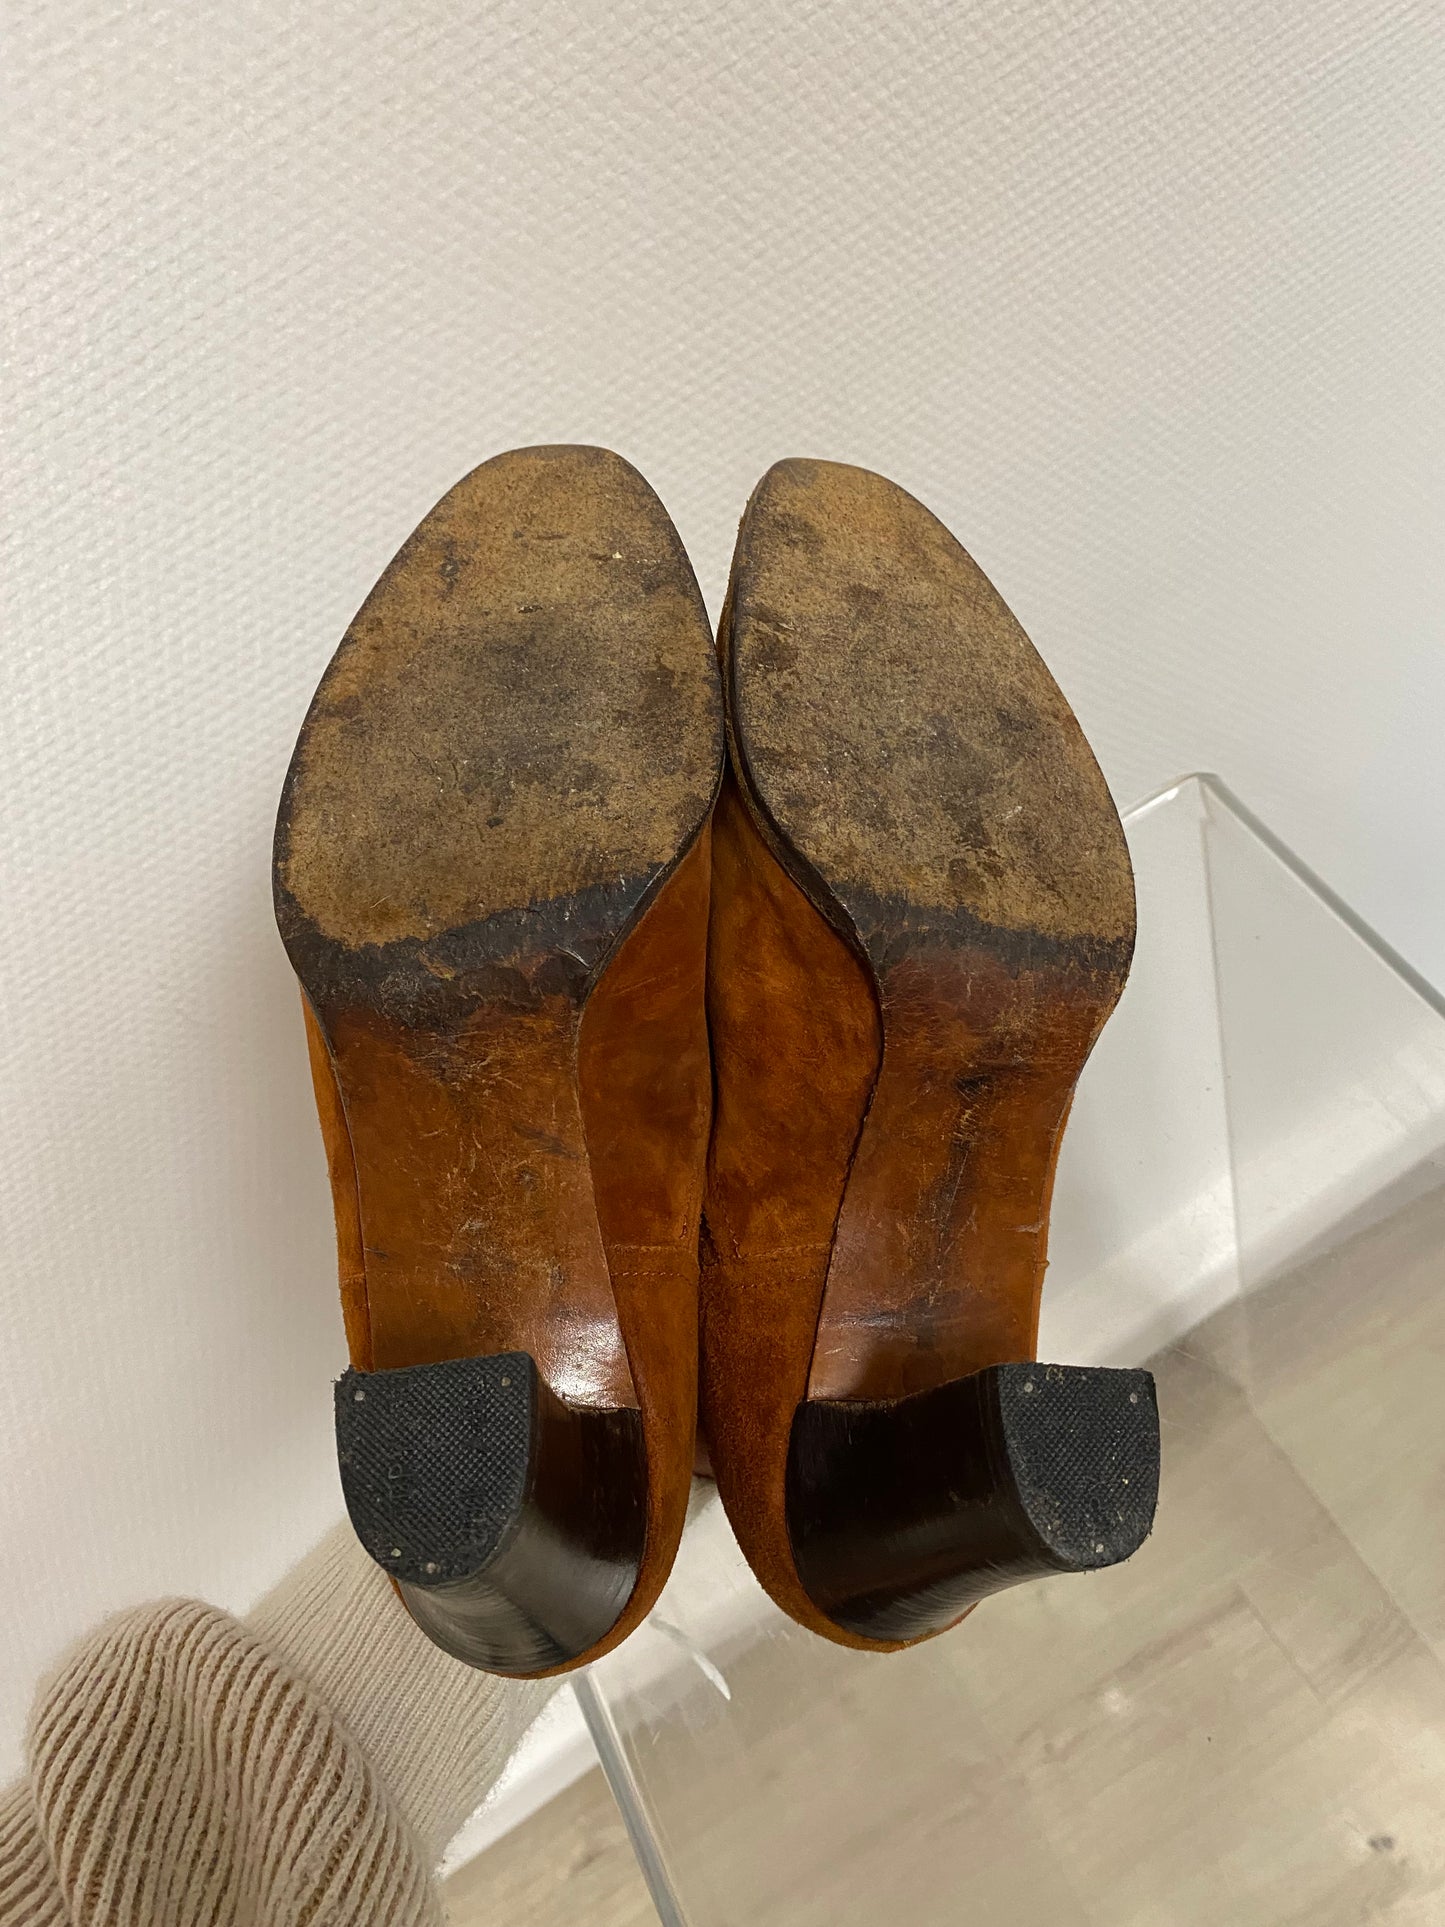 Chaussure en daim Yves Saint Laurent